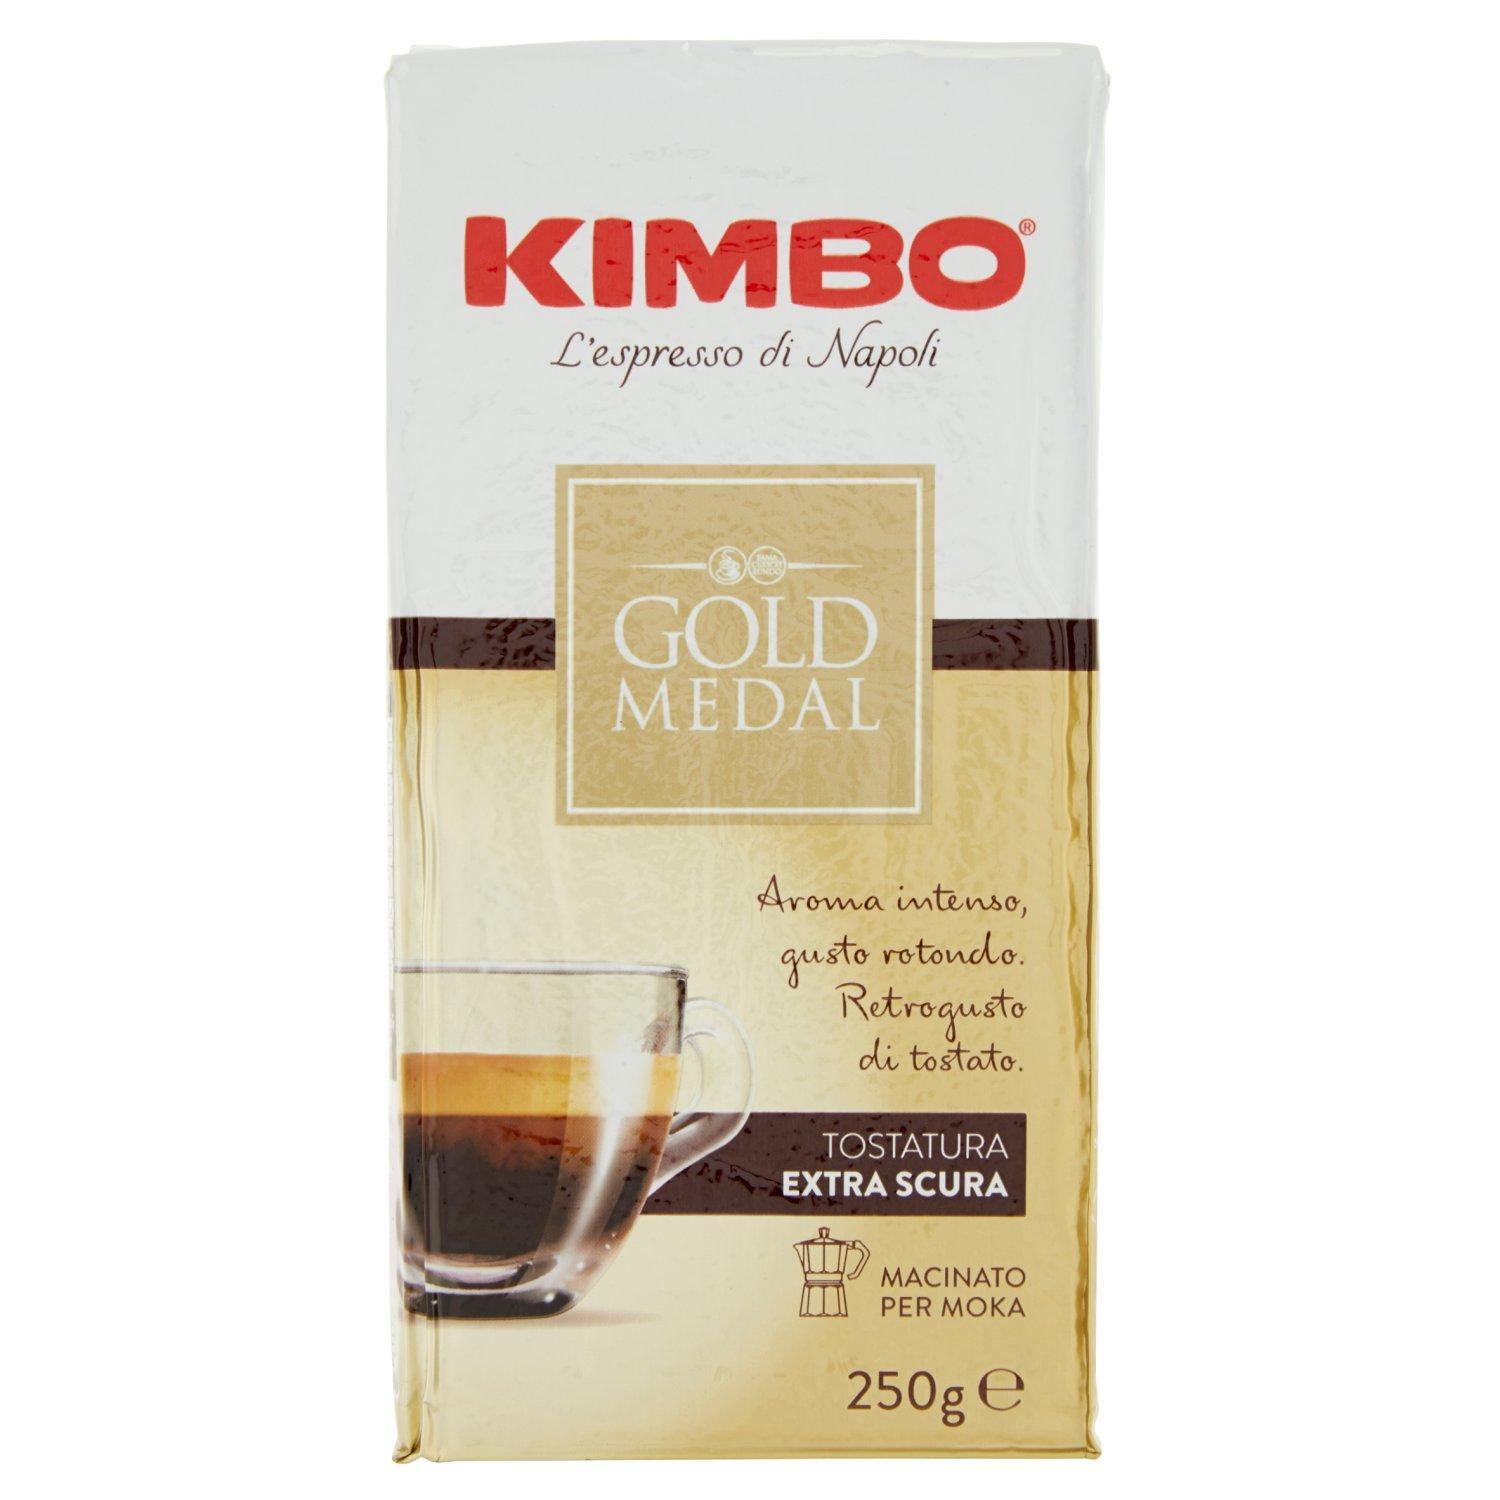 caffe-macinato-gold-medal-busta-kimbo-250gr-1